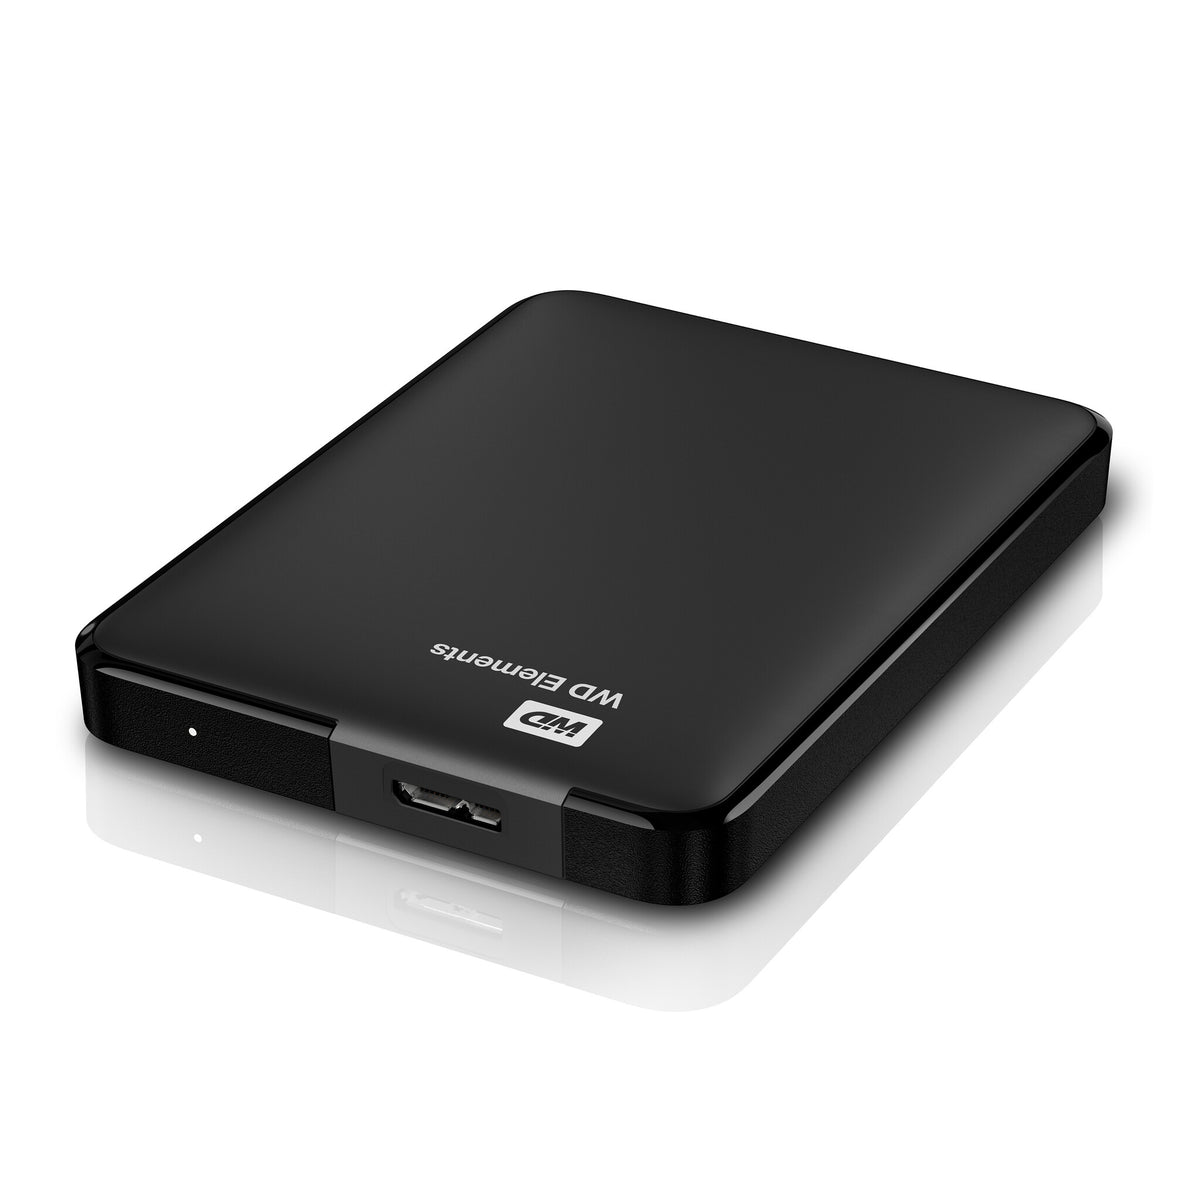 Western Digital WD Elements - Portable External Hard Drive in Black - 2 TB